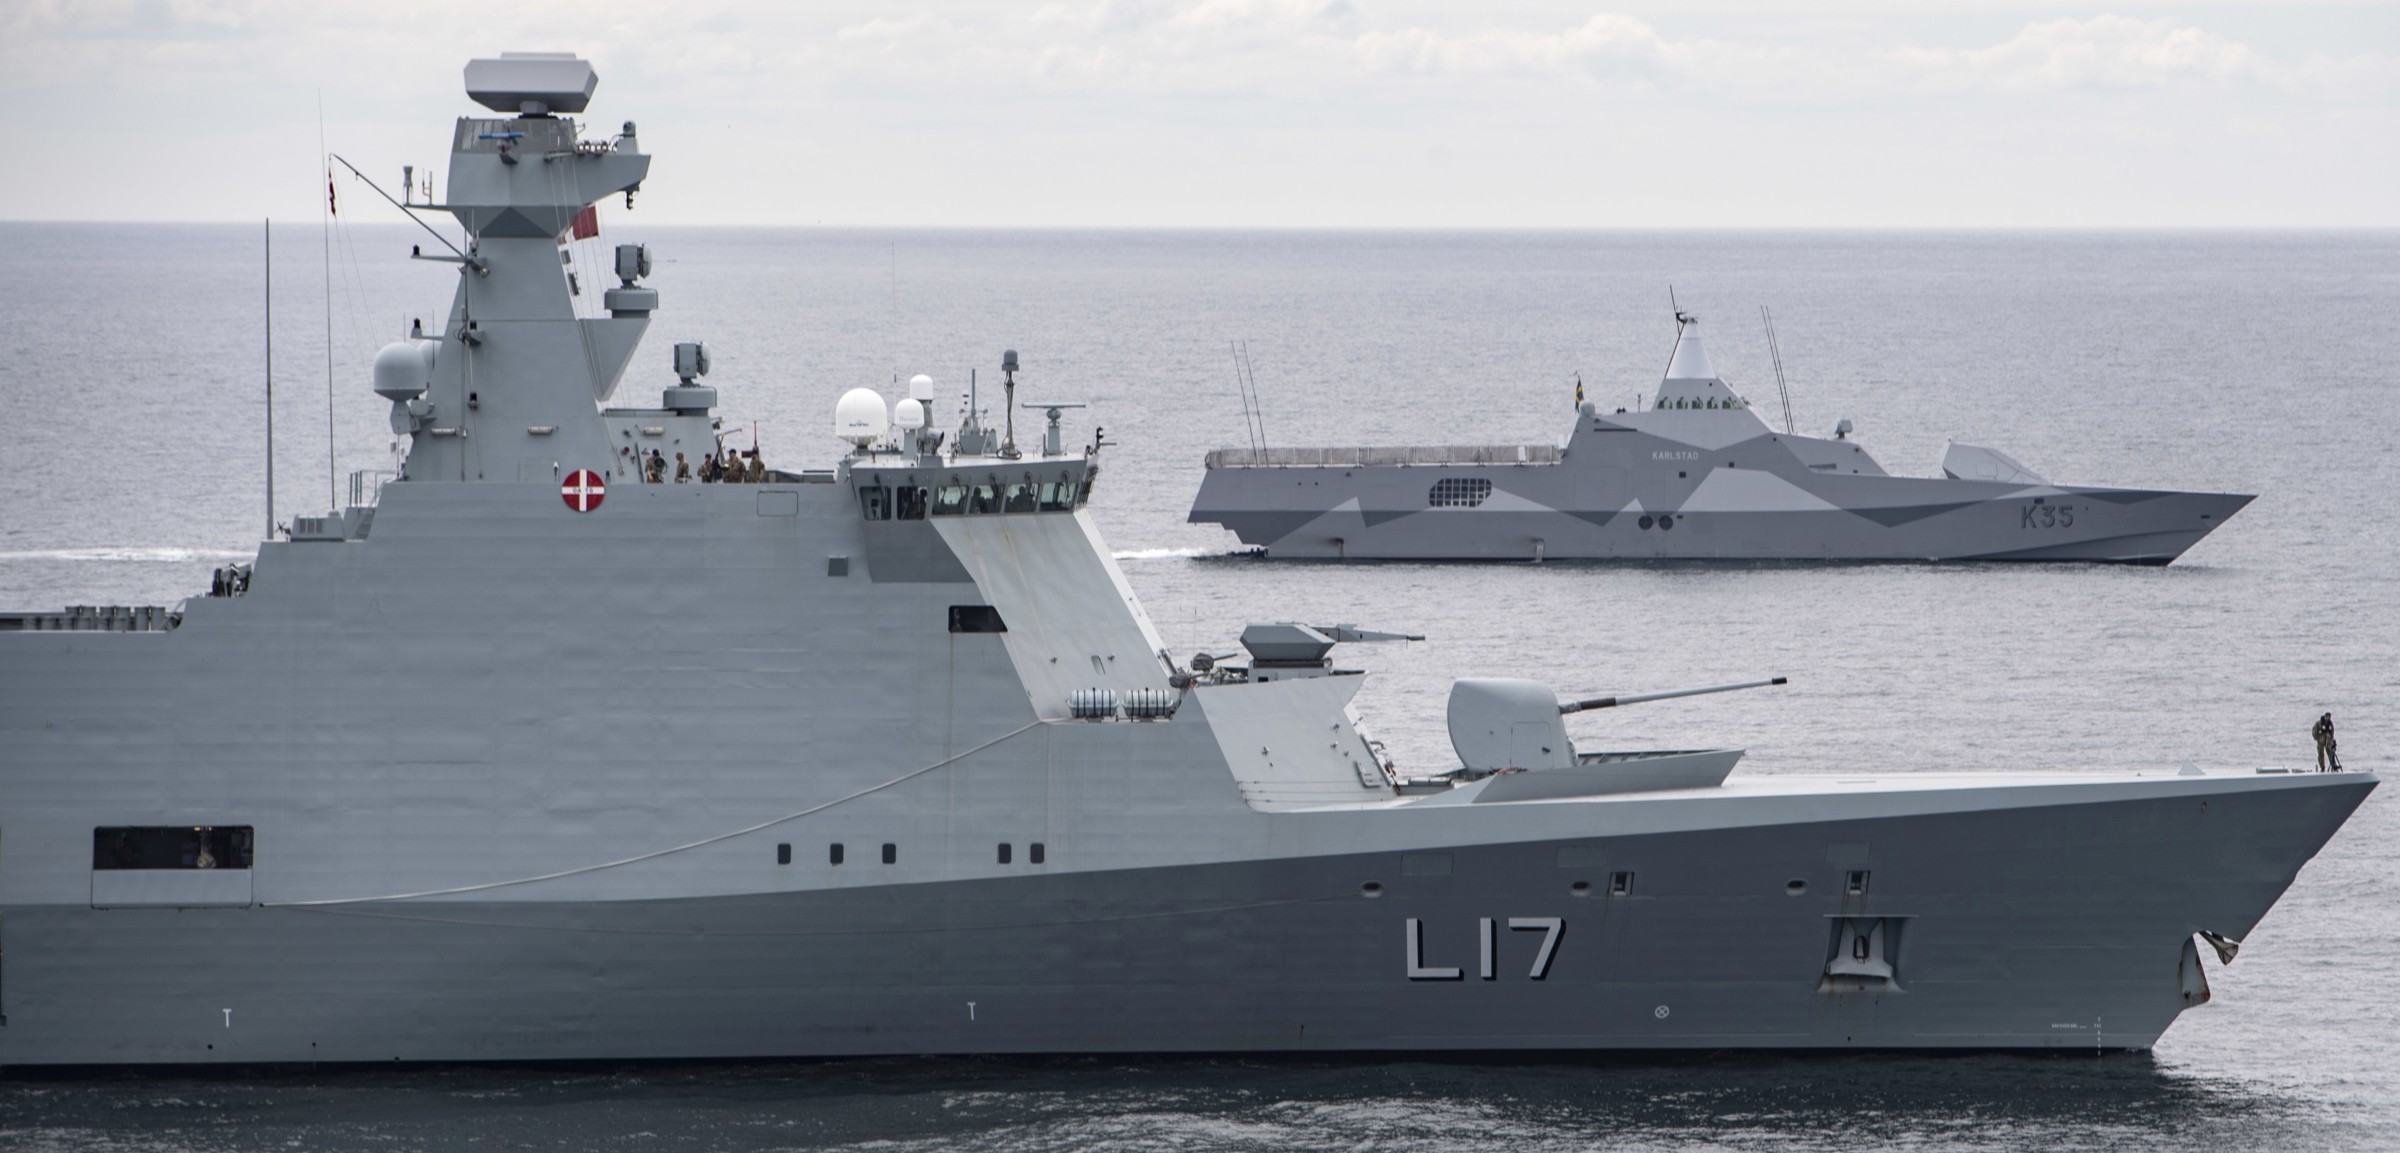 f-342 hdms esbern snare l-17 frigate command support ship royal danish navy 96